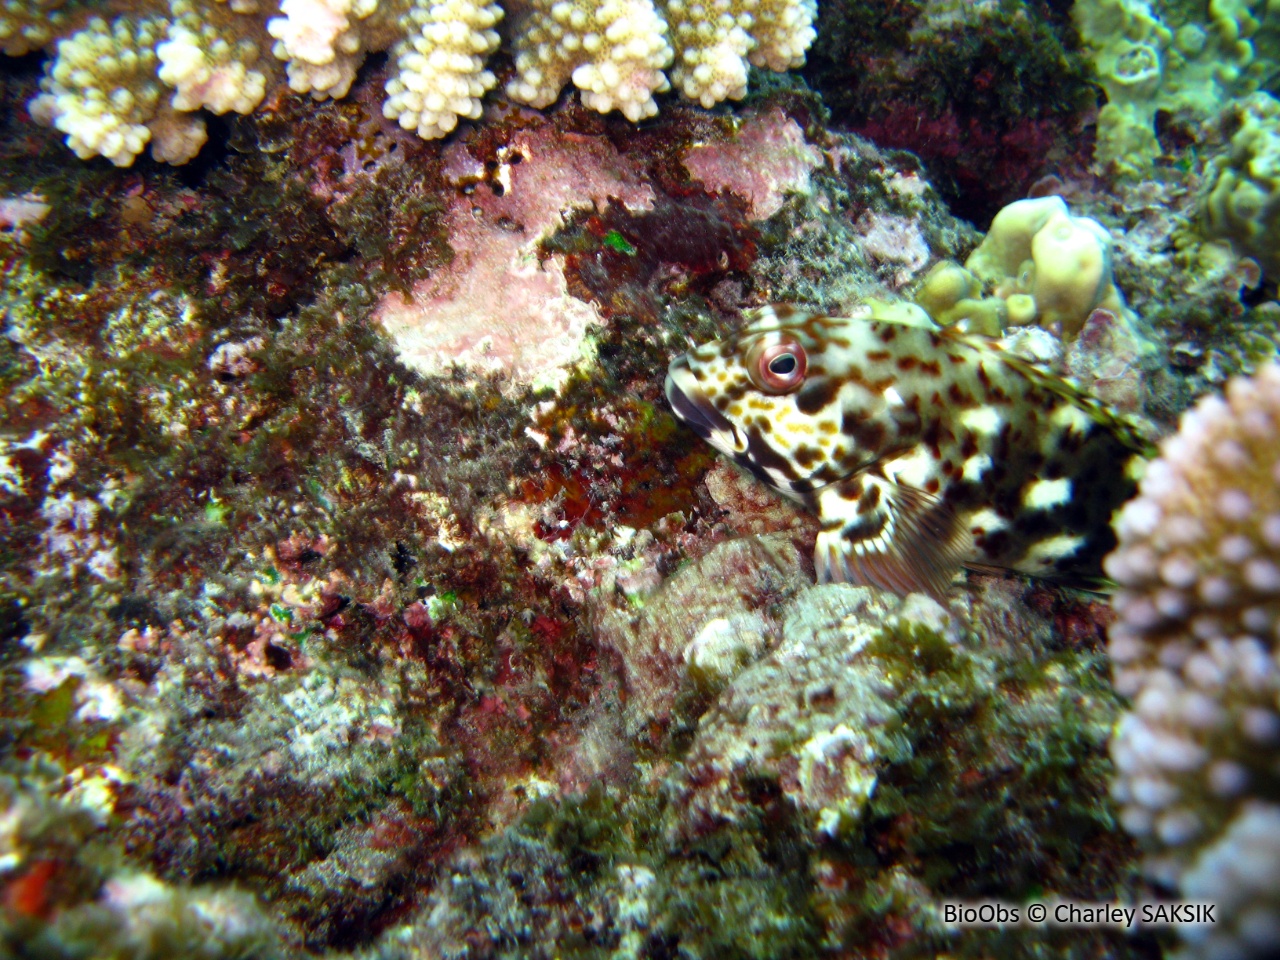 Epervier de corail - Cirrhitus pinnulatus - Charley SAKSIK - BioObs